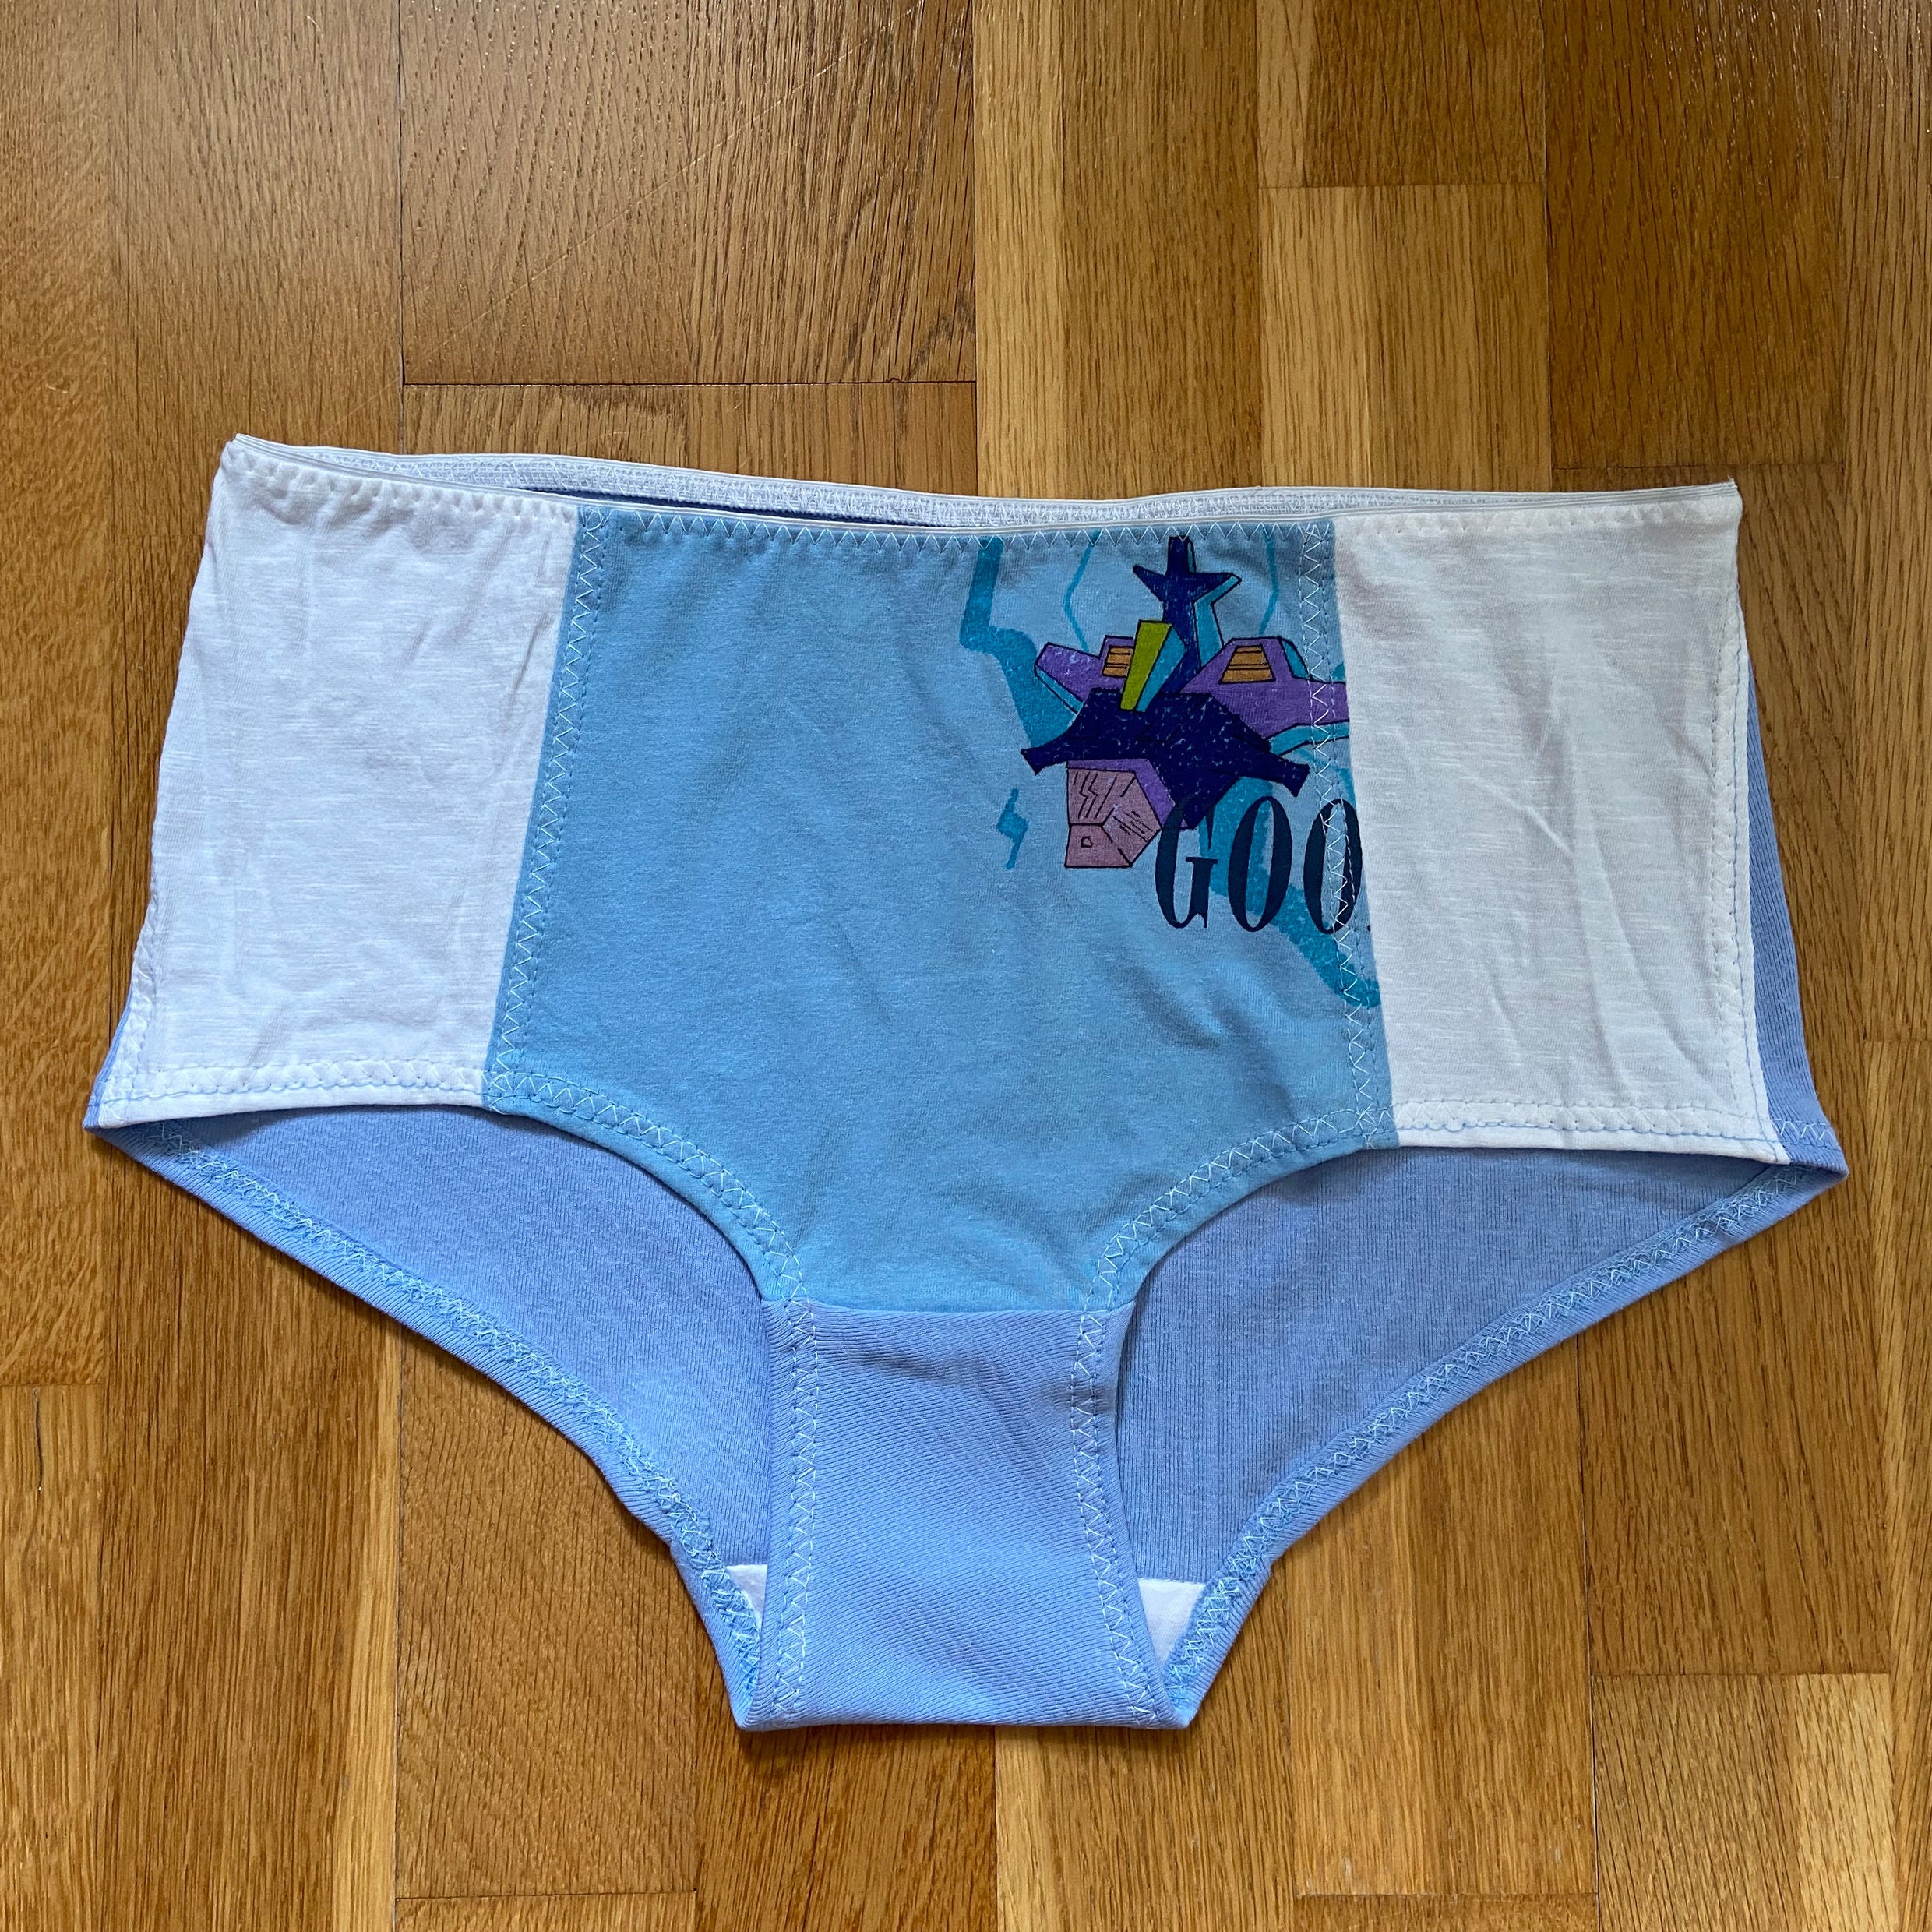 Nerdy Underwear Fabric Atomic Wedgie science Geek Underwear by  Retrorudolphs Geek Funny Cotton Fabric by the Yard With Spoonflower -   Denmark